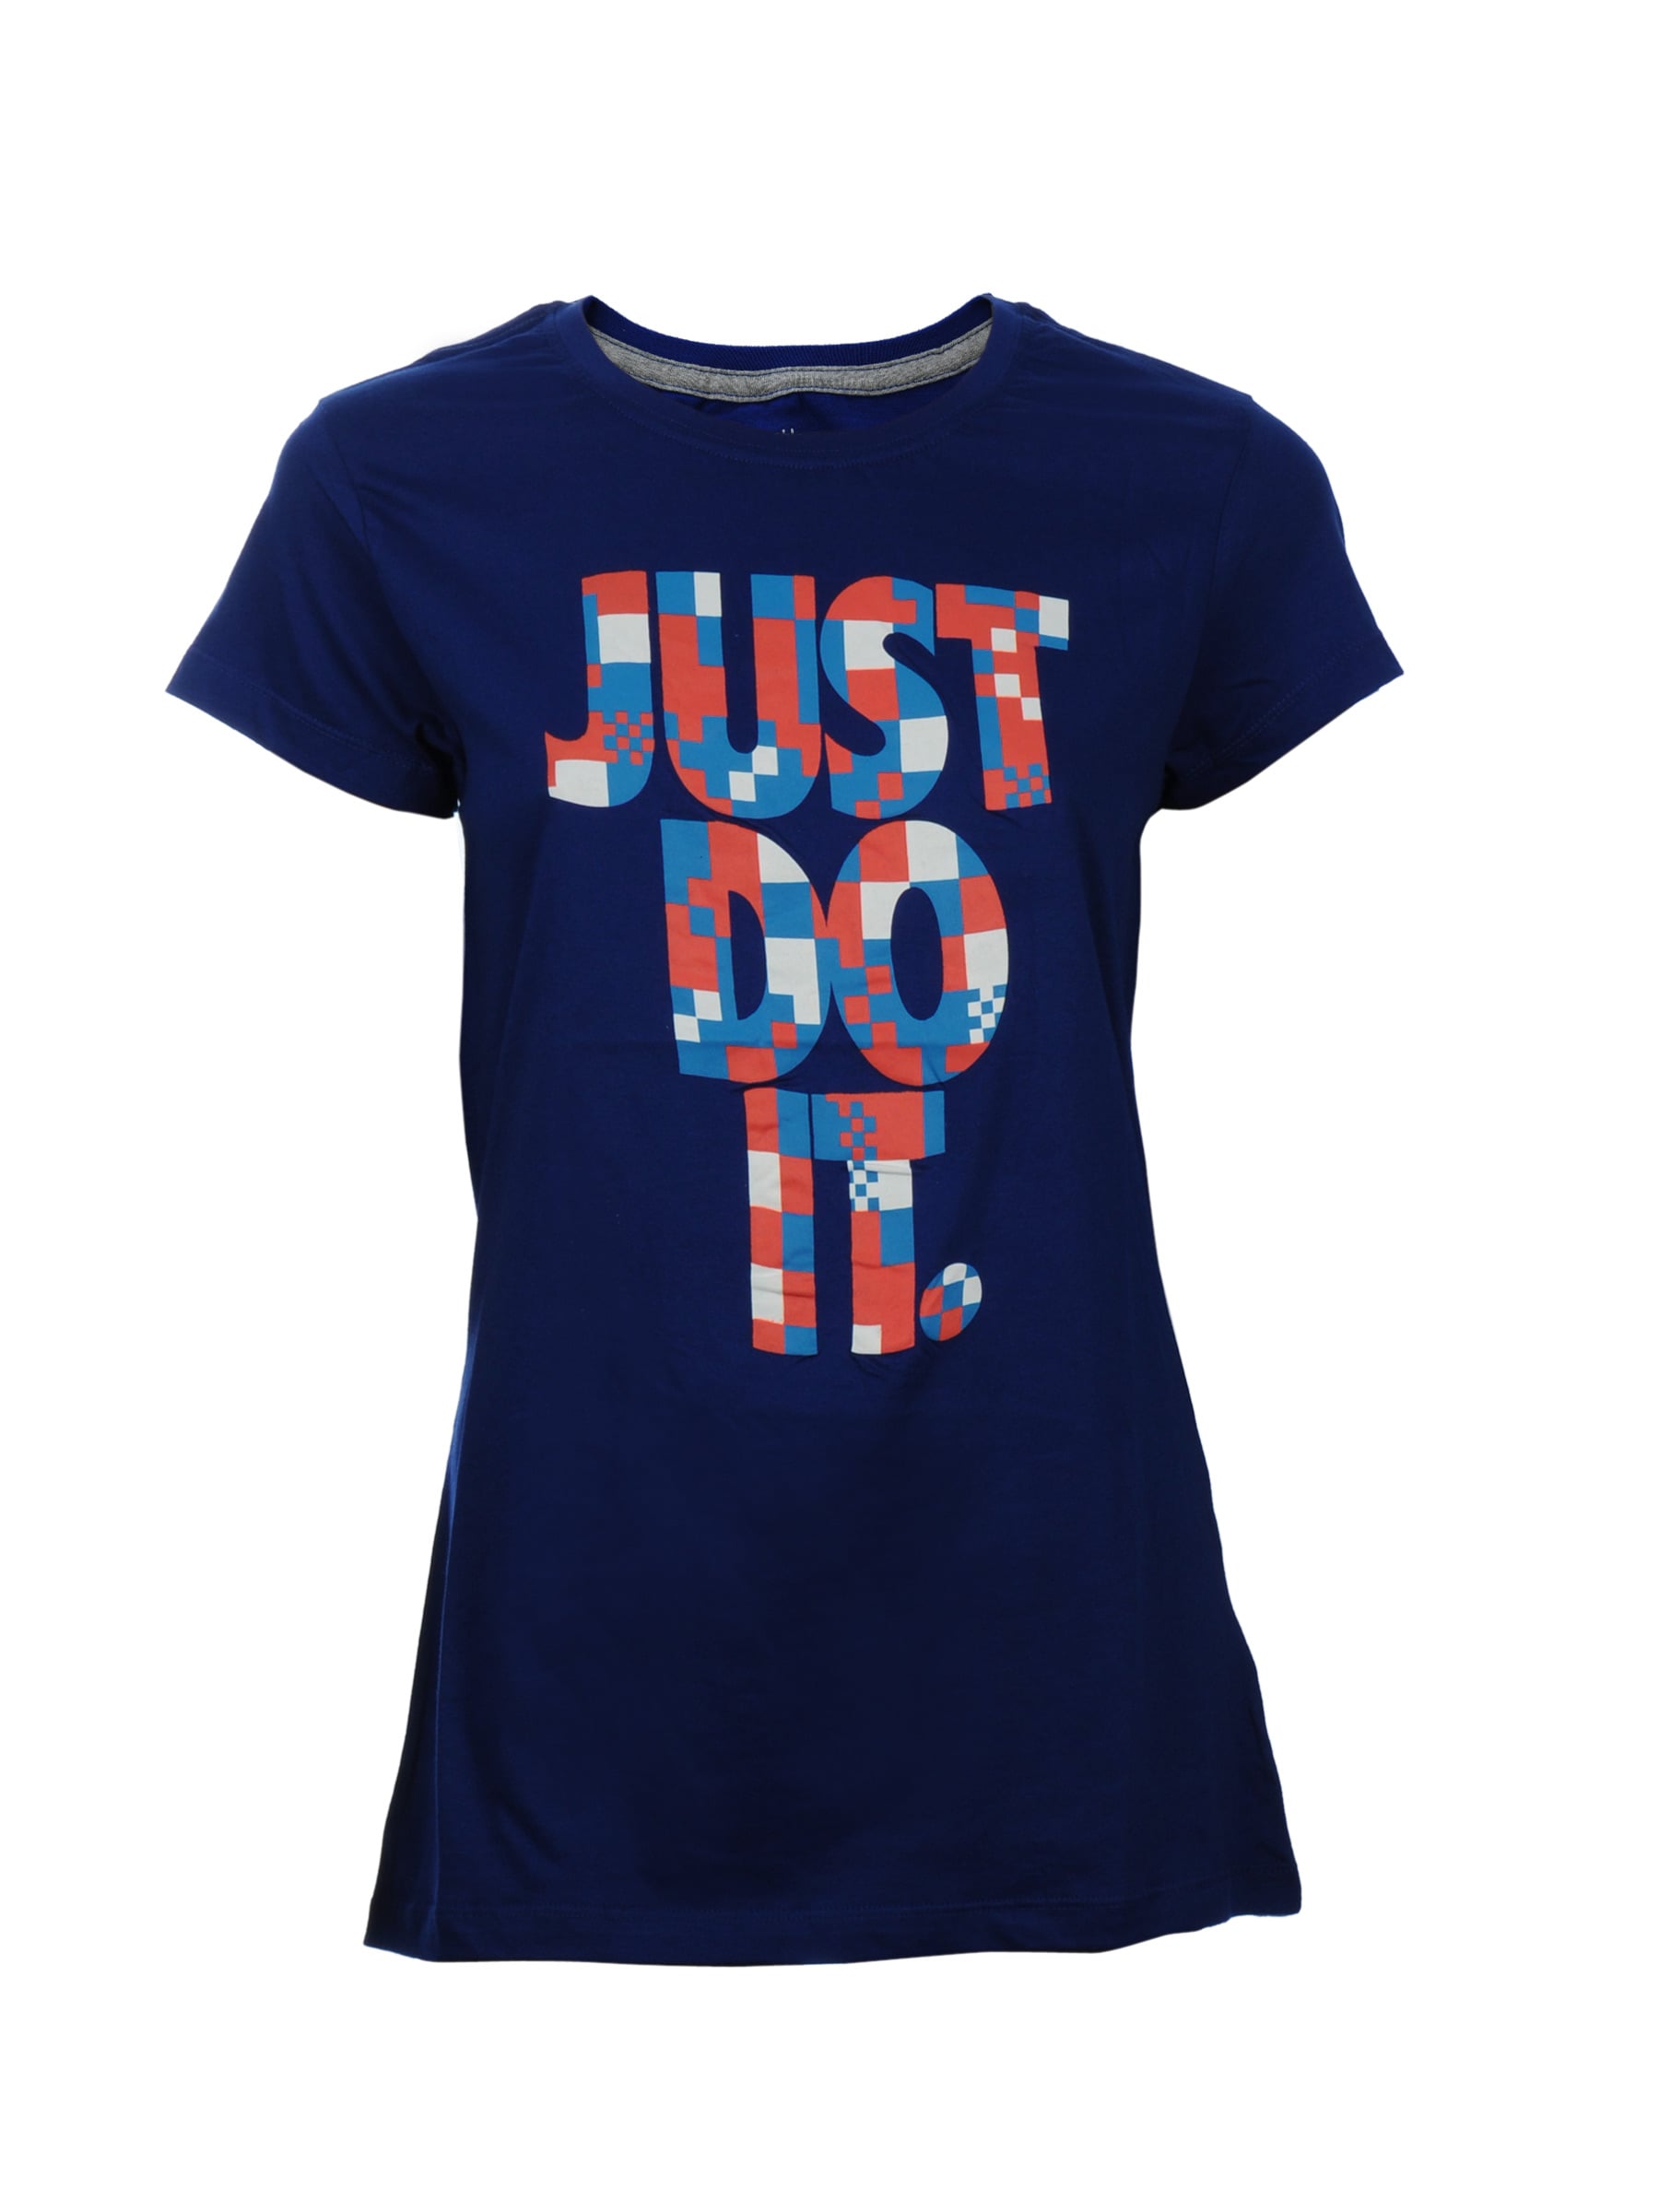 Nike Women As Jdi Pixels Blue T-Shirts